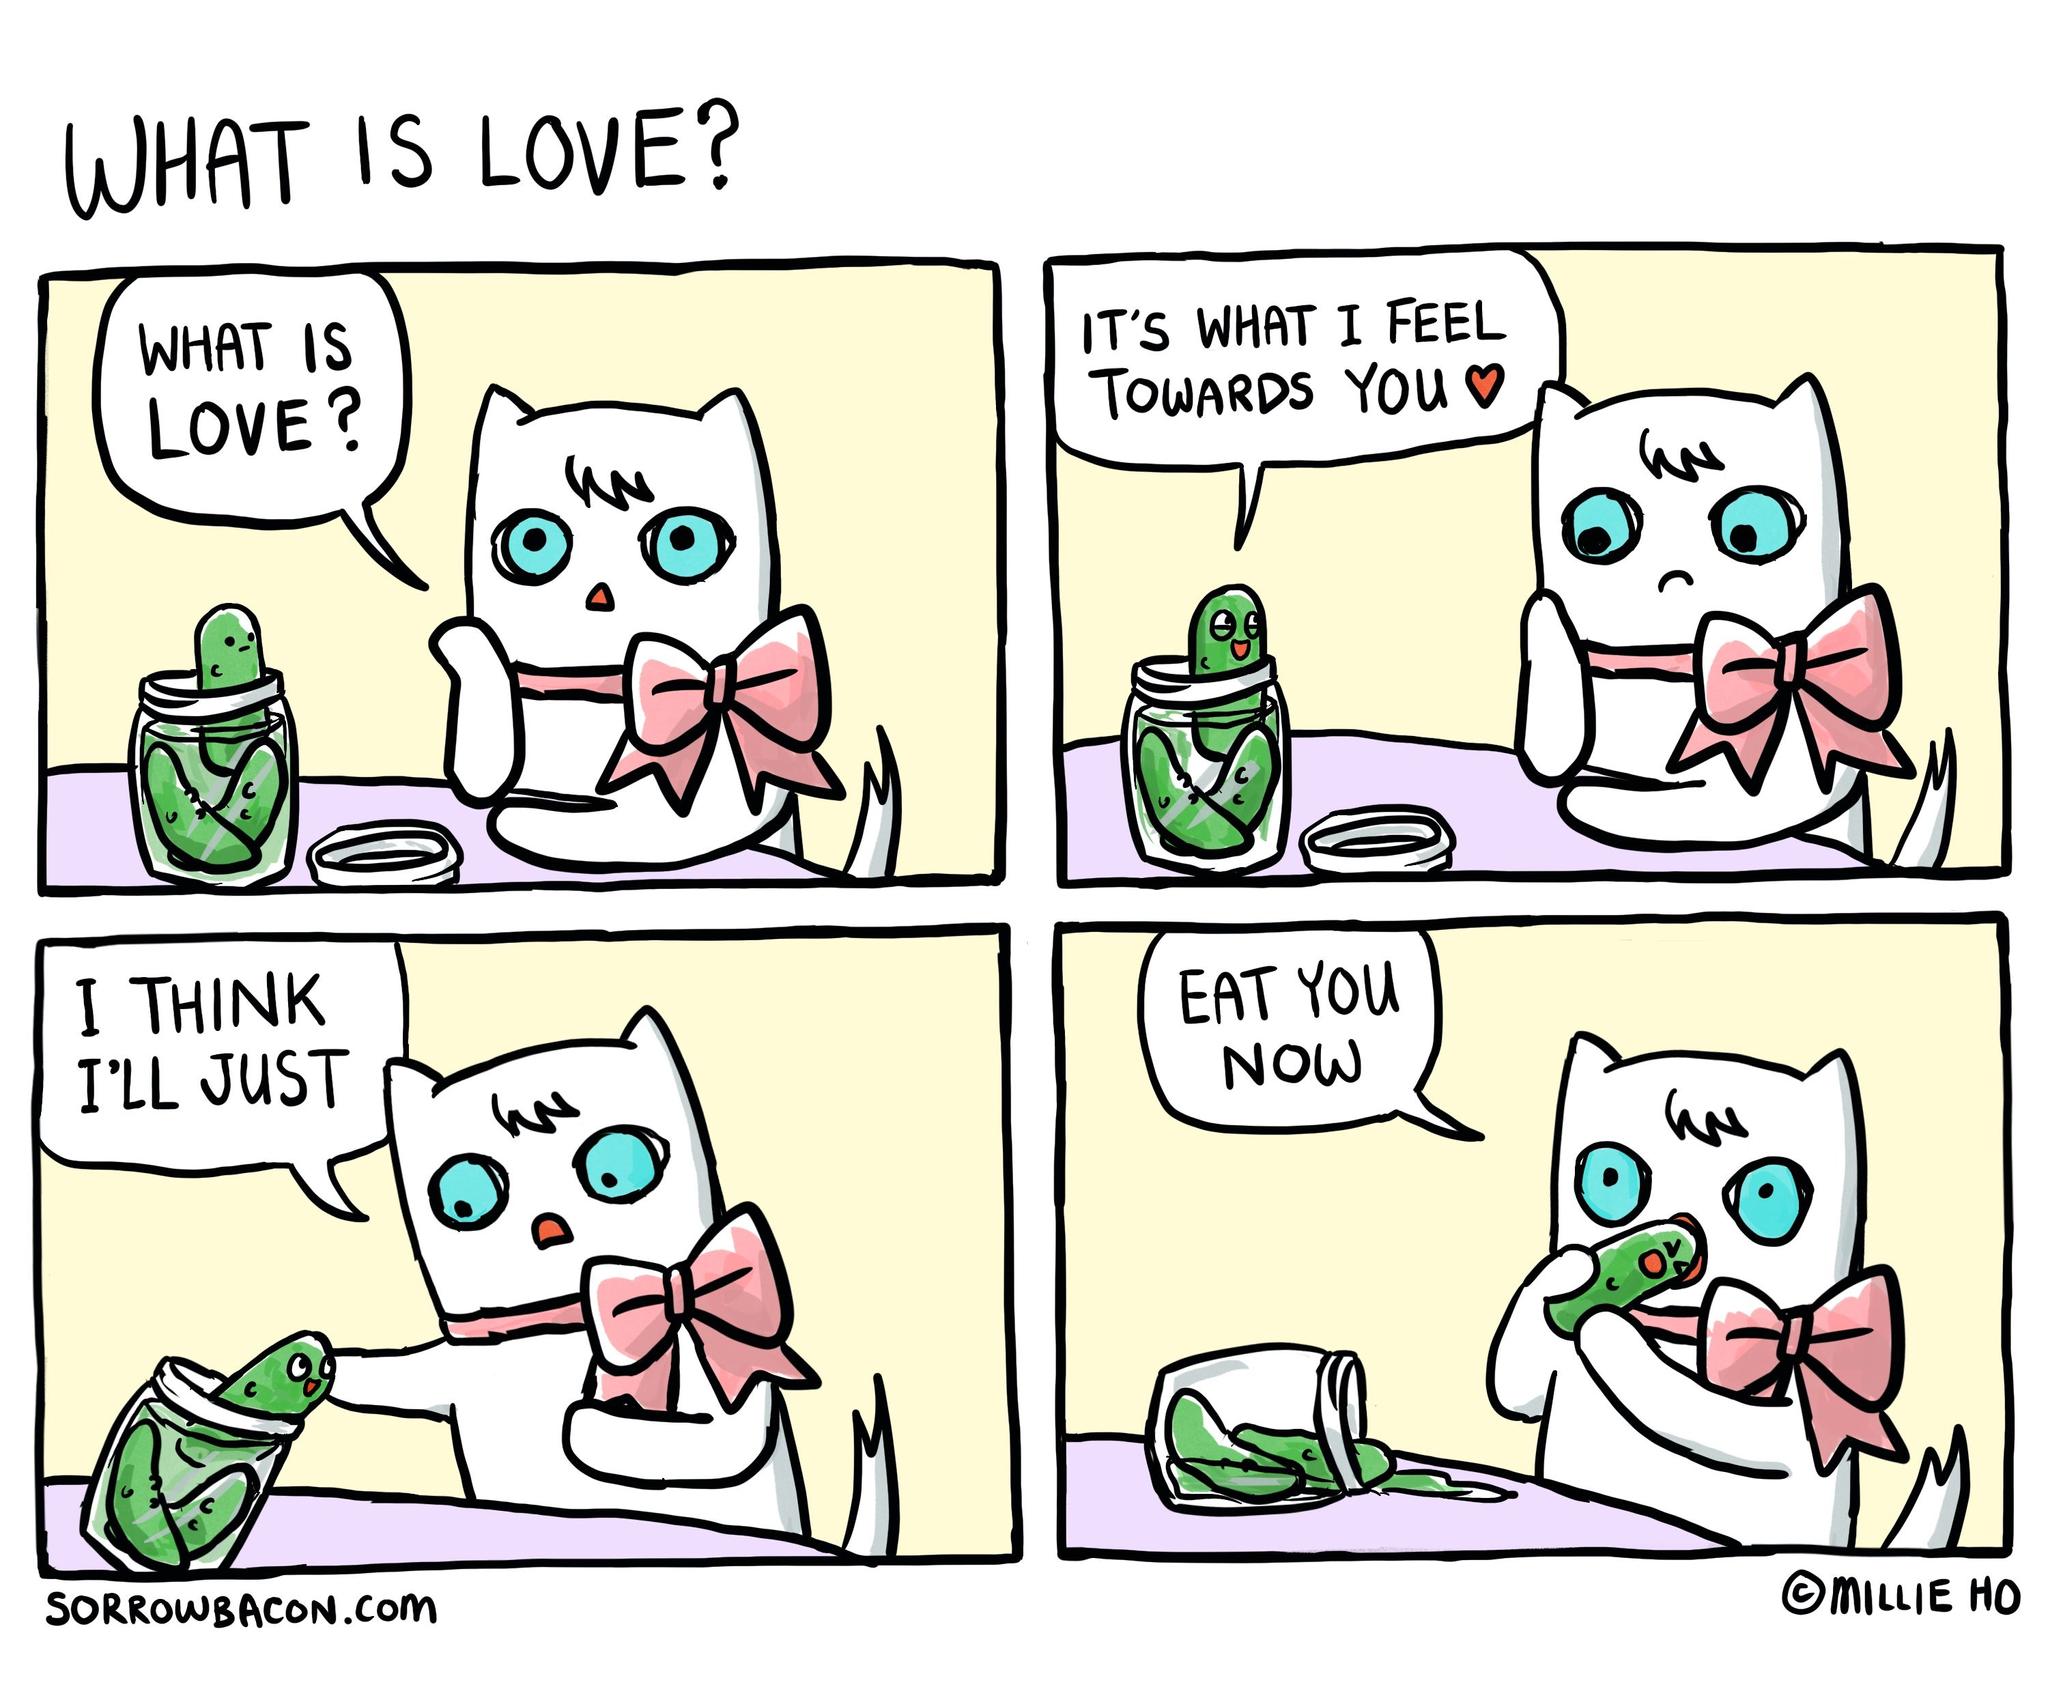 What Is Love sorrowbacon comic